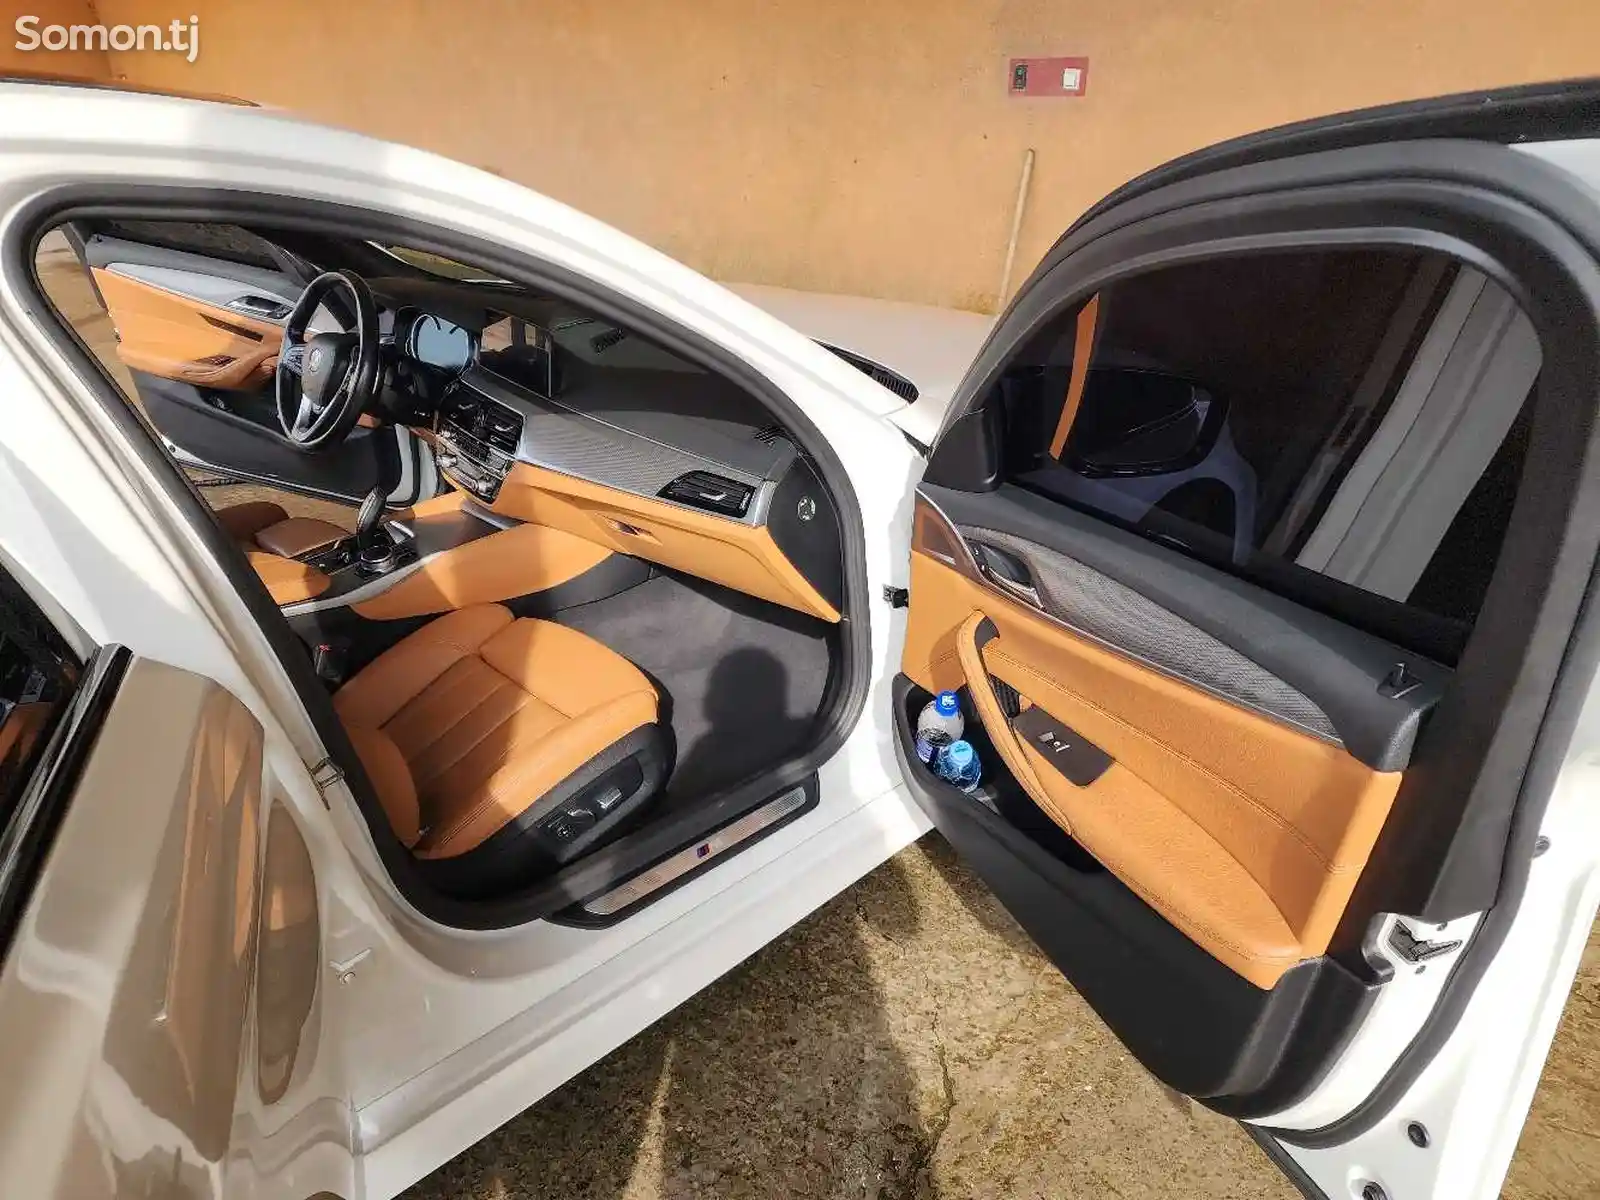 BMW 5 series, 2017-3